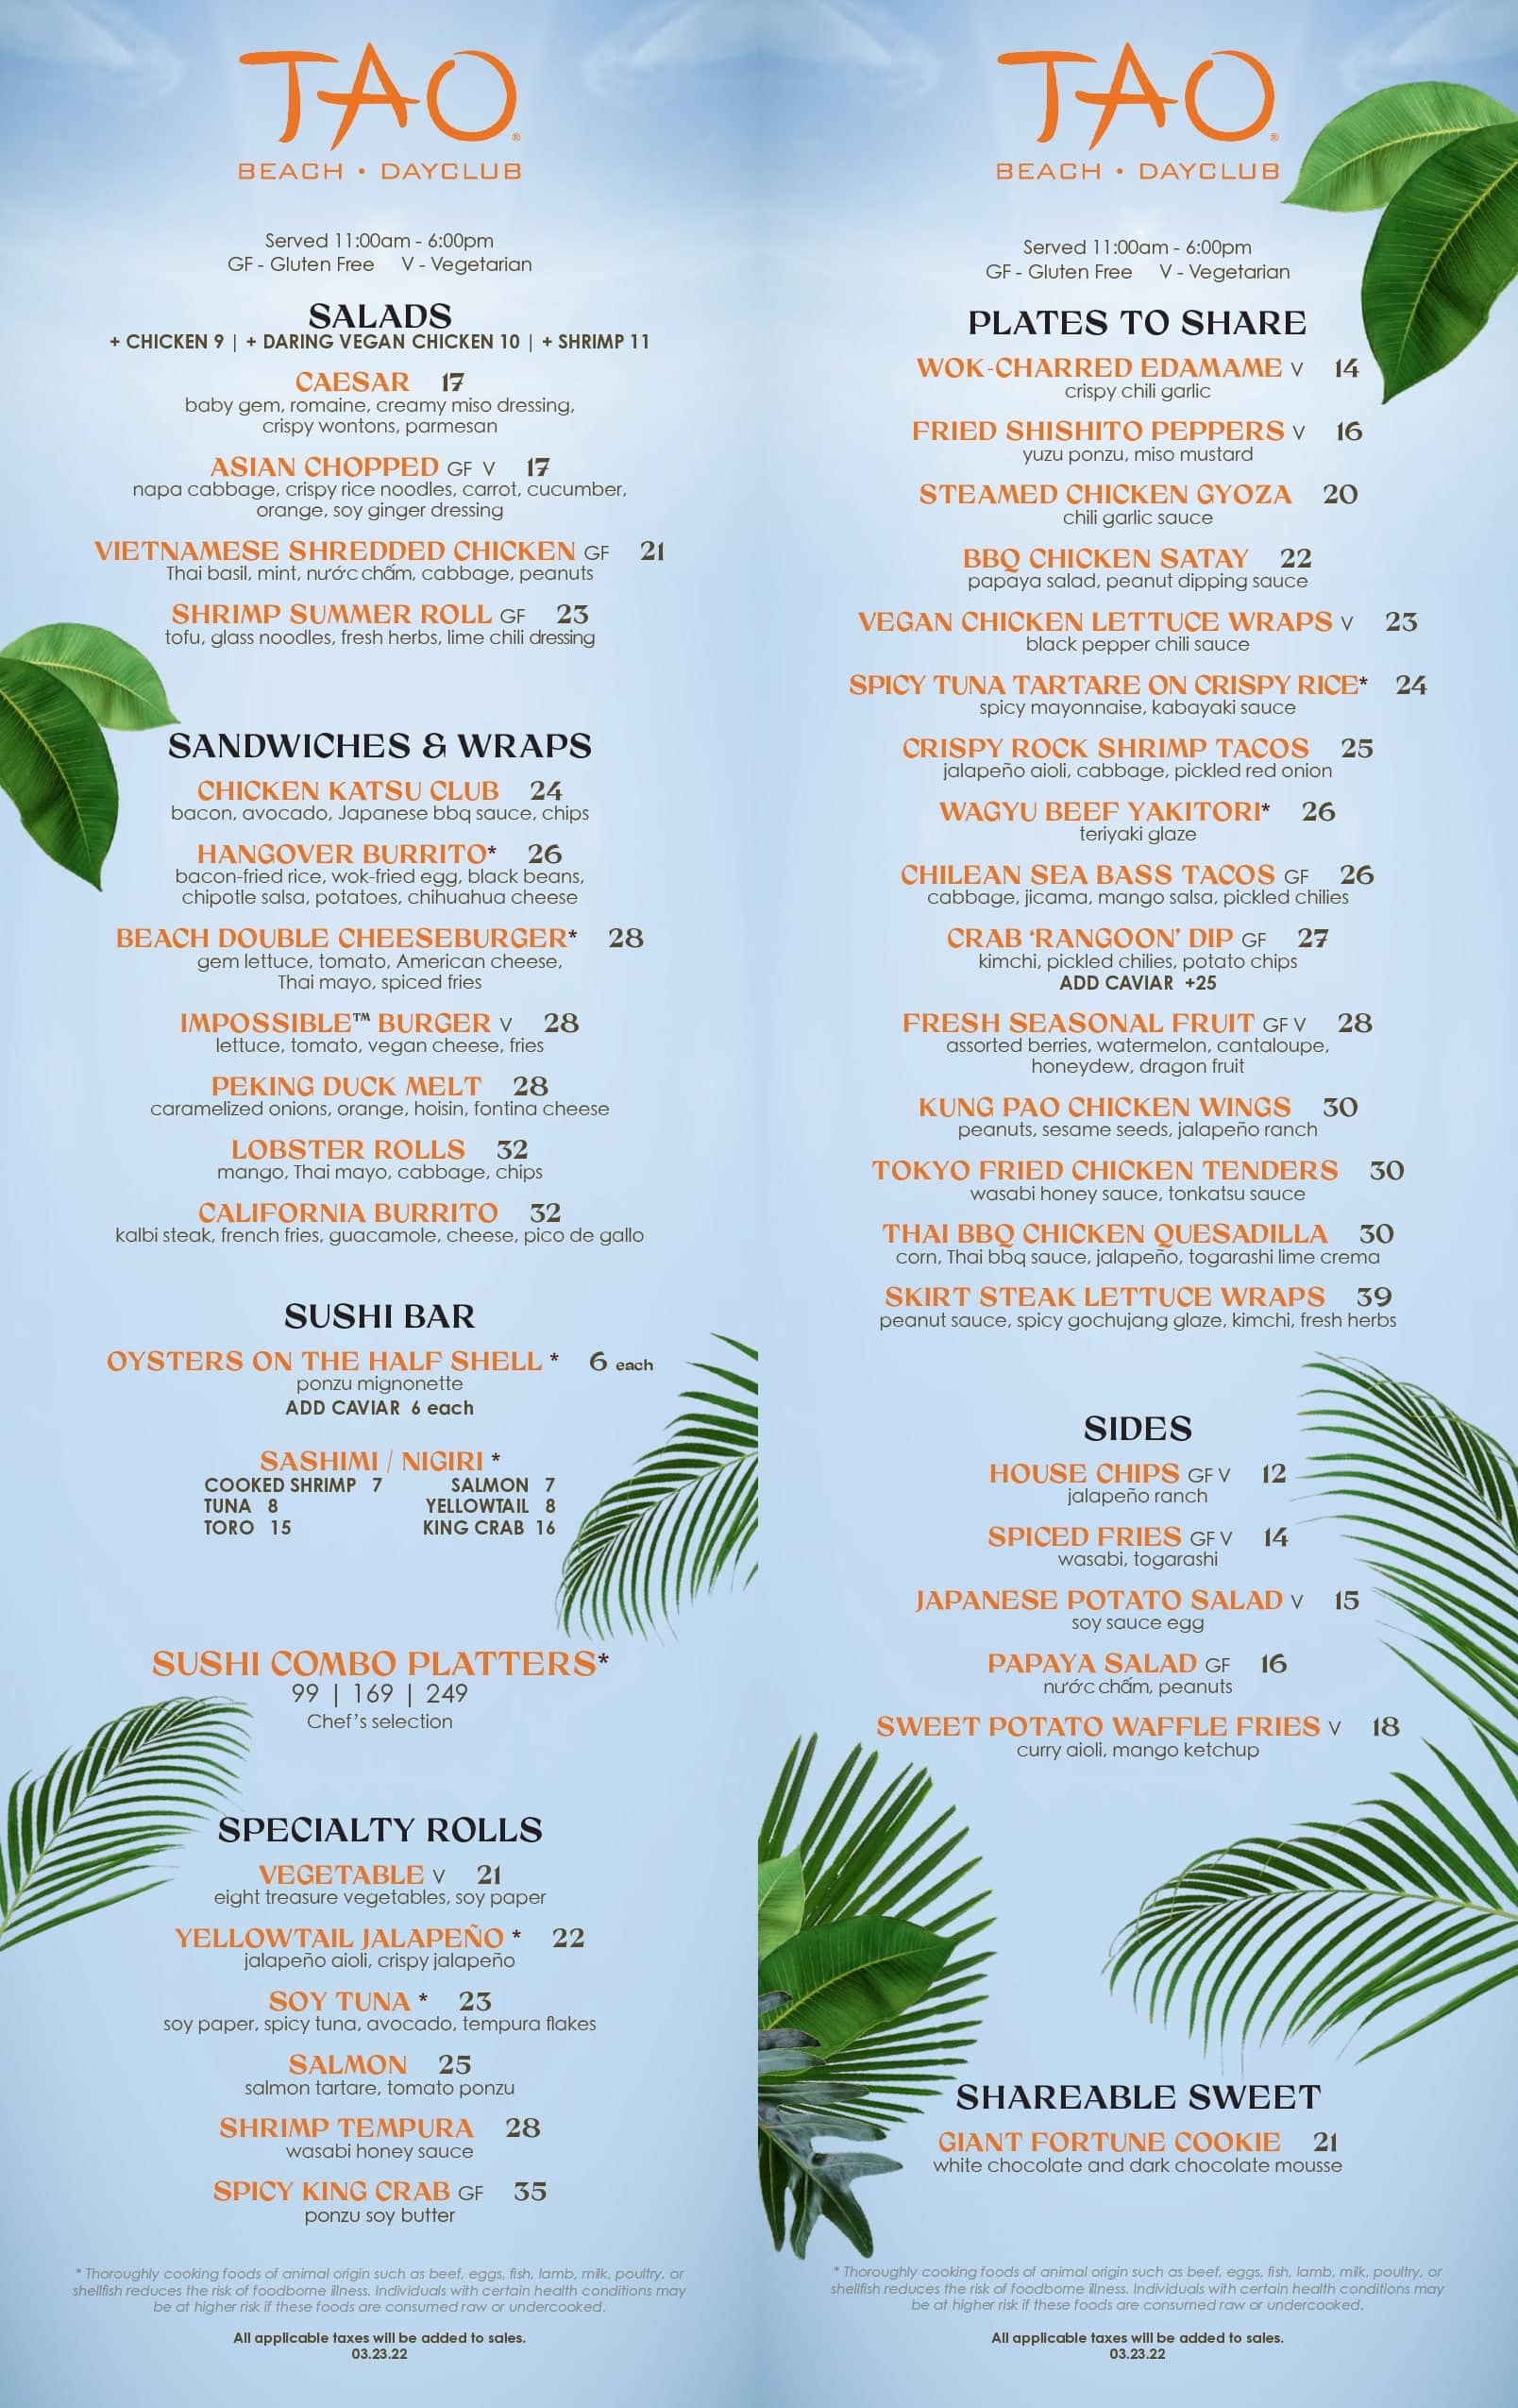 Tao Beach Club food menu